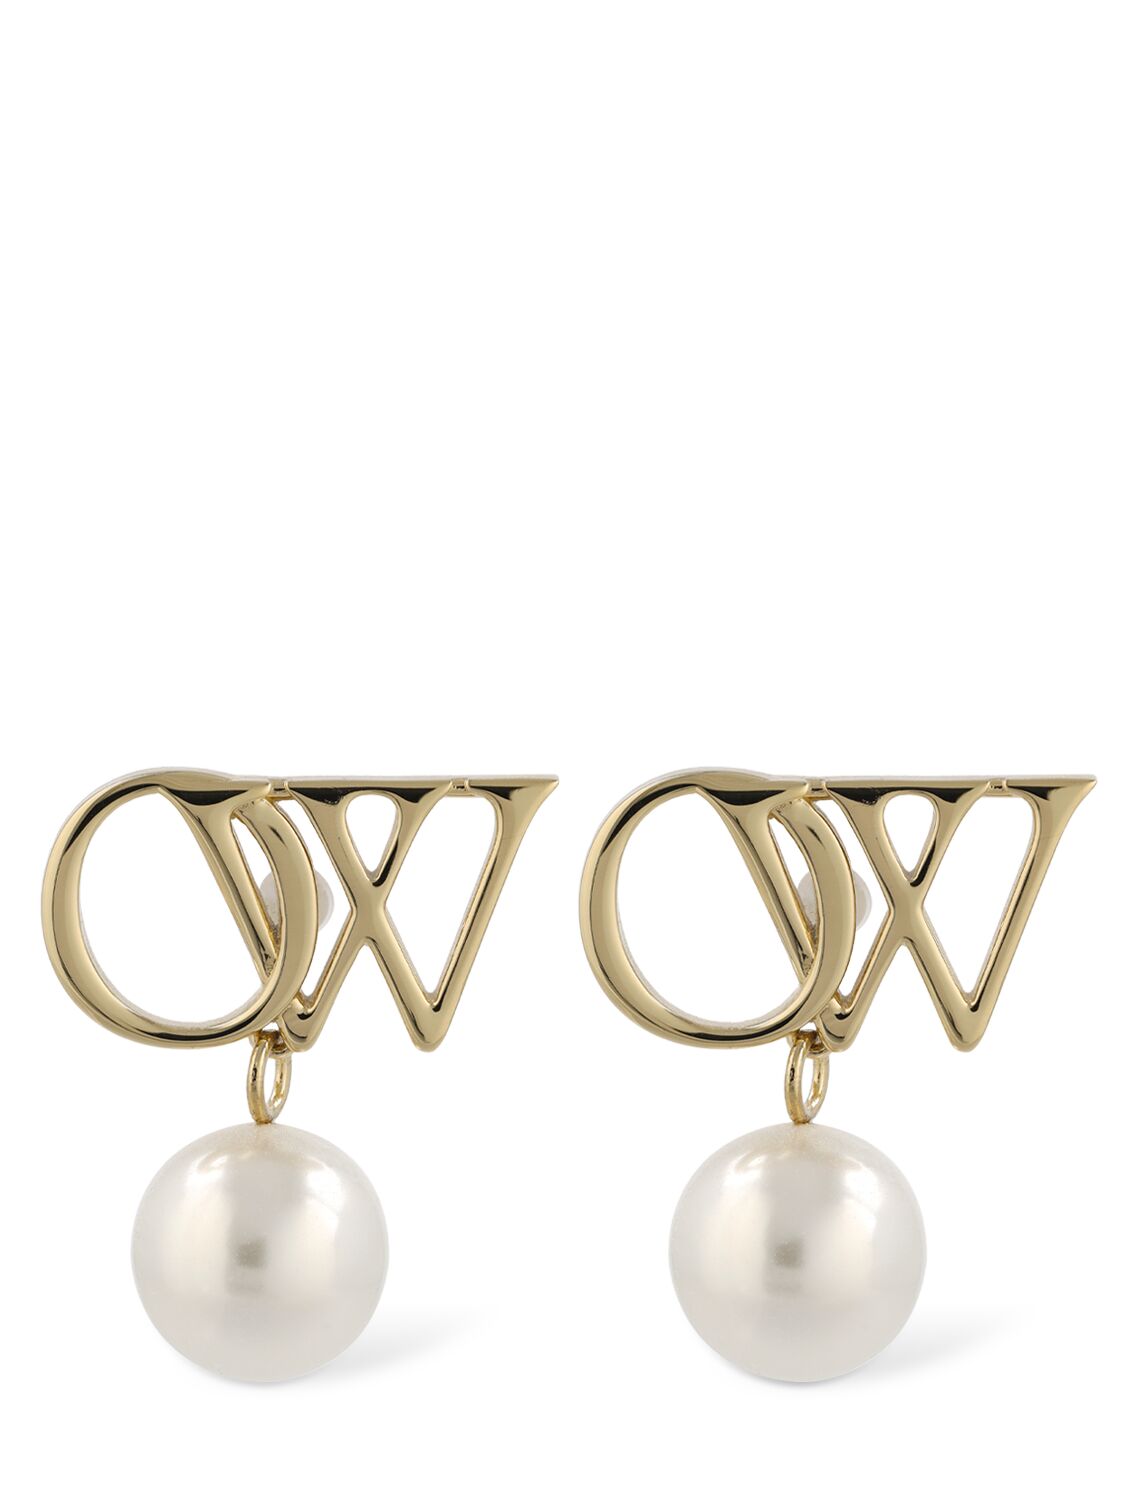 Image of Ow Brass & Faux Pearl Earrings